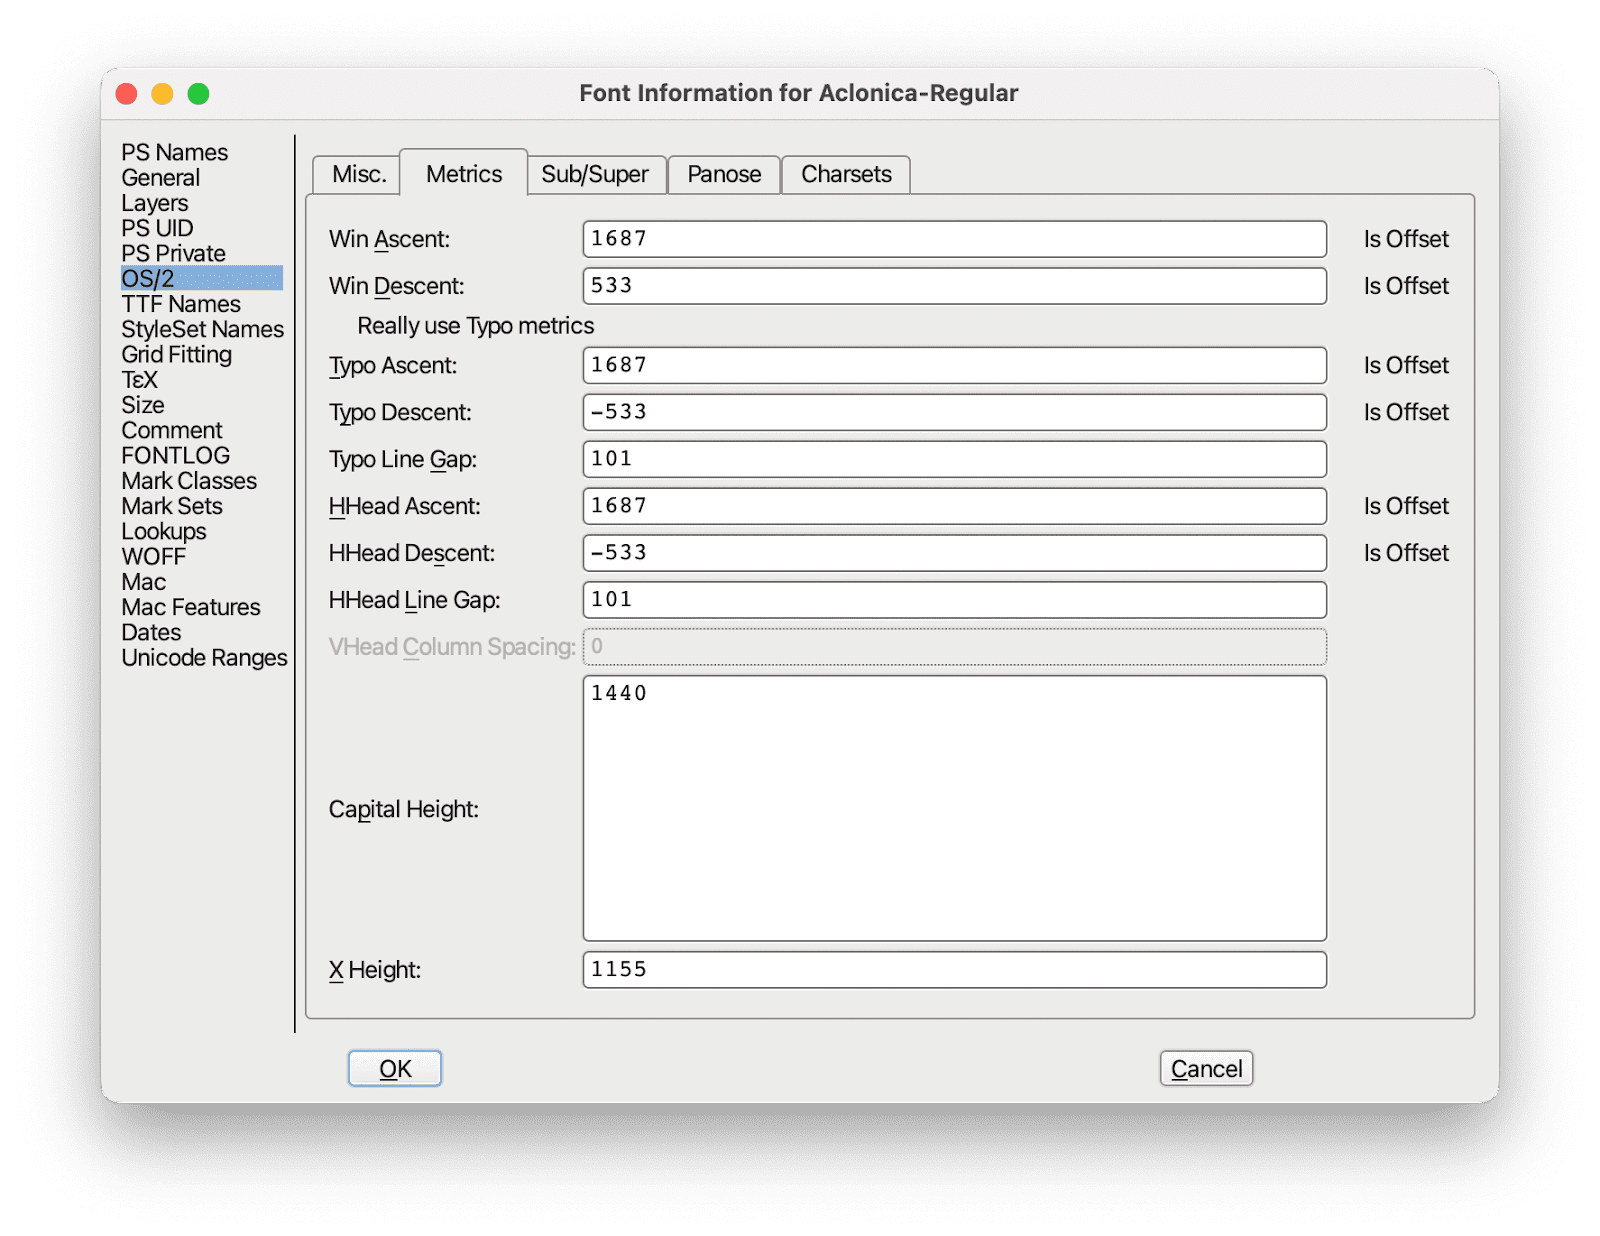 FontForge 中字型資訊對話方塊的螢幕截圖。對話方塊會顯示字型指標，例如「Typo Ascent」、「Typo Descent」和「Typo Line Gap」。